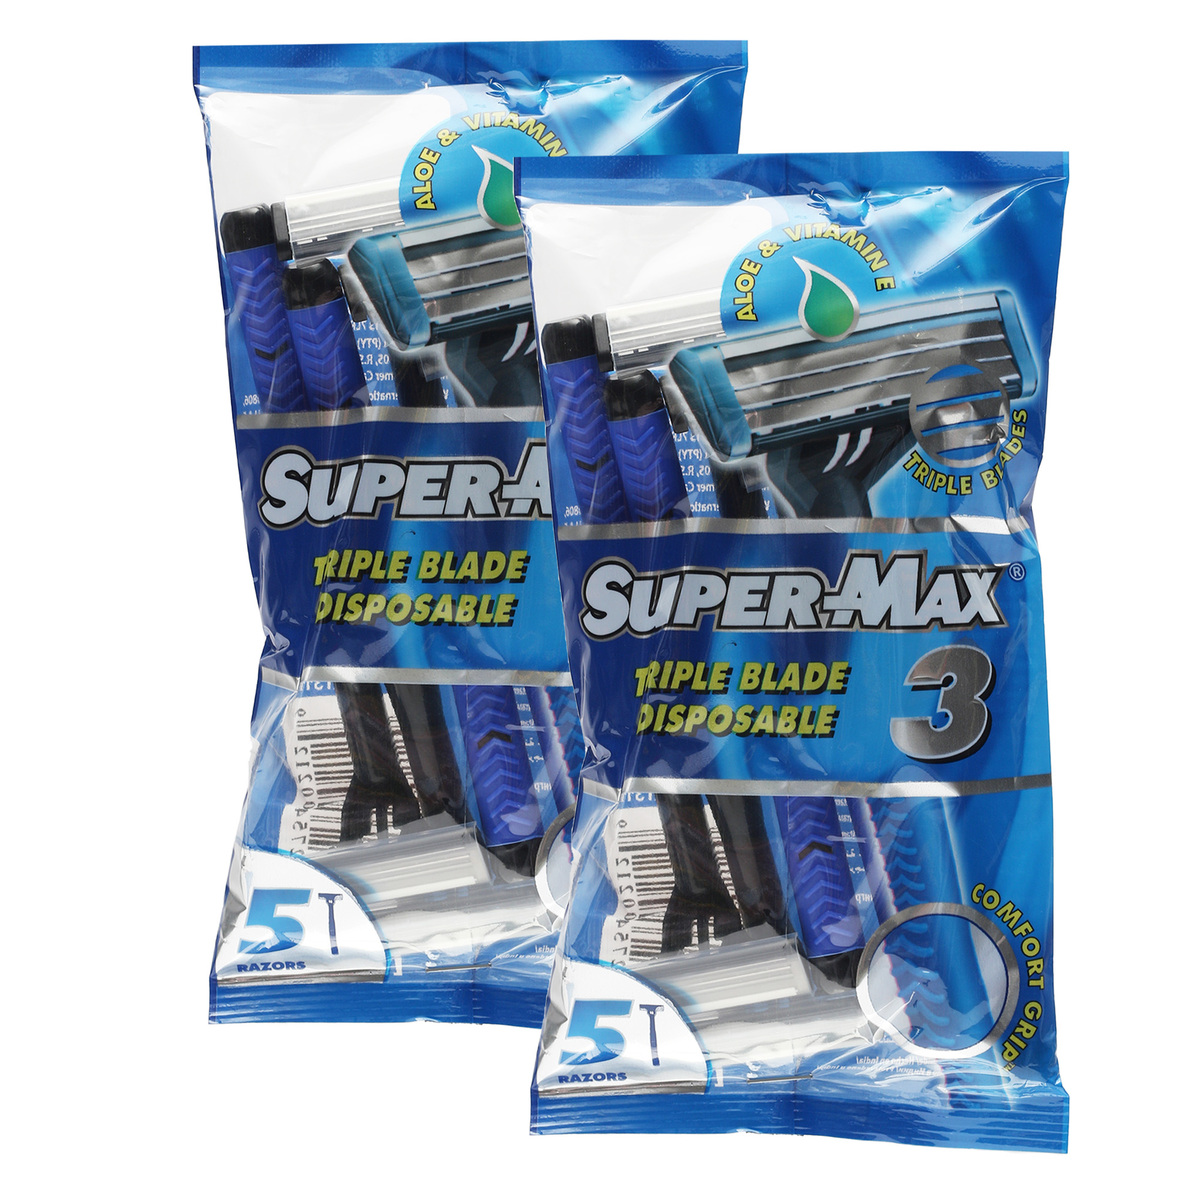 Super Max Disposable Razor Triple Blade Value Pack 2 x 5 pcs